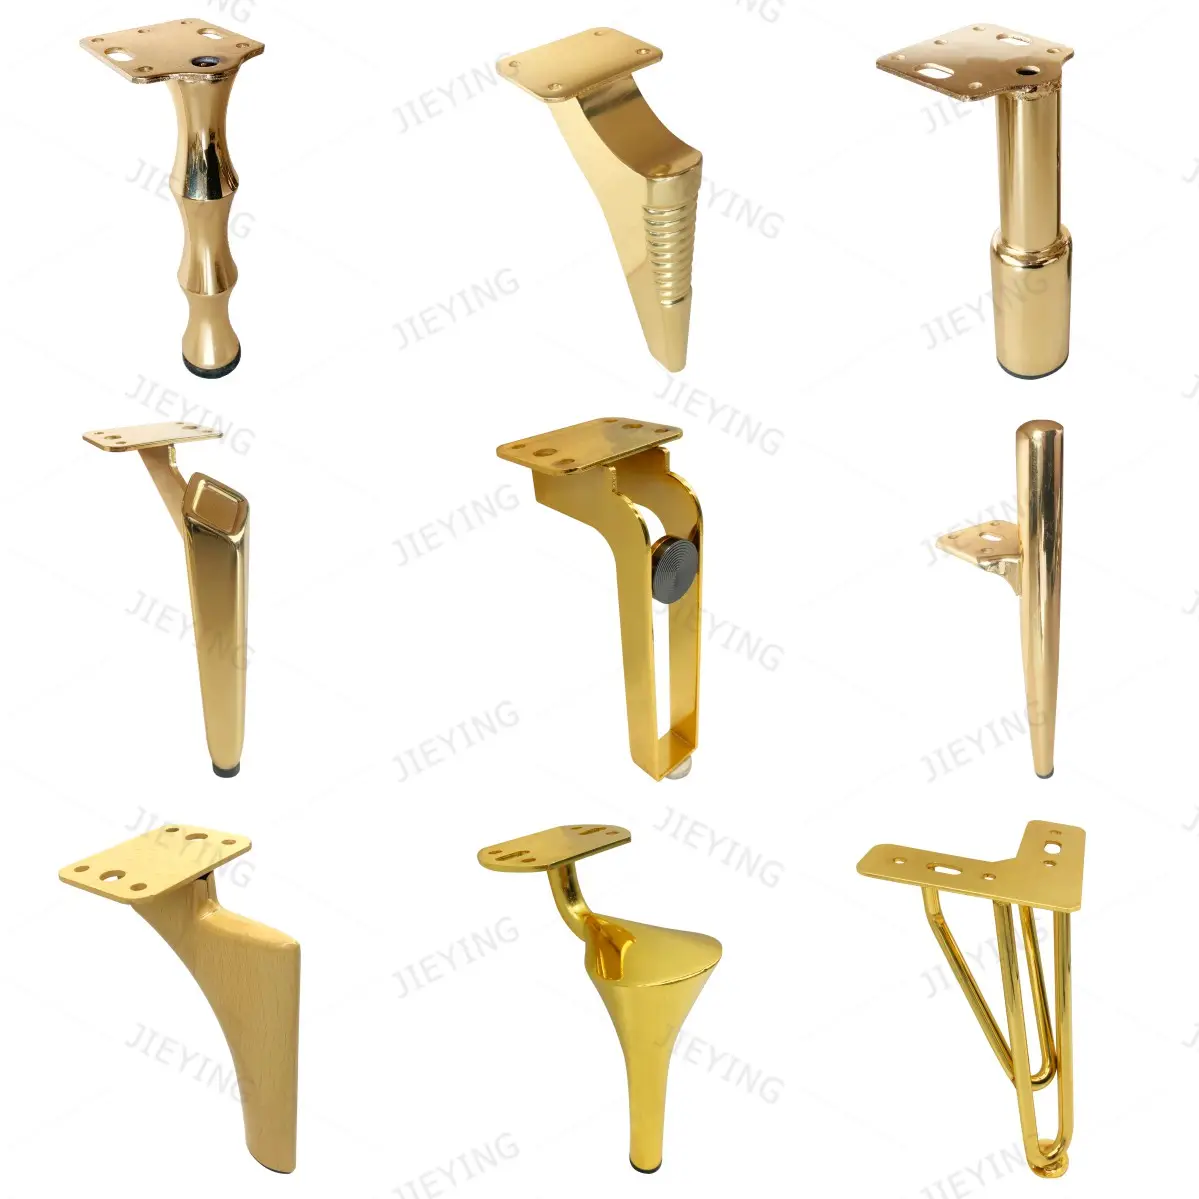 Patas de gabinete de muebles de metal personalizadas de fábrica, patas de sofá doradas, patas de cama de metal, patas de muebles de hardware